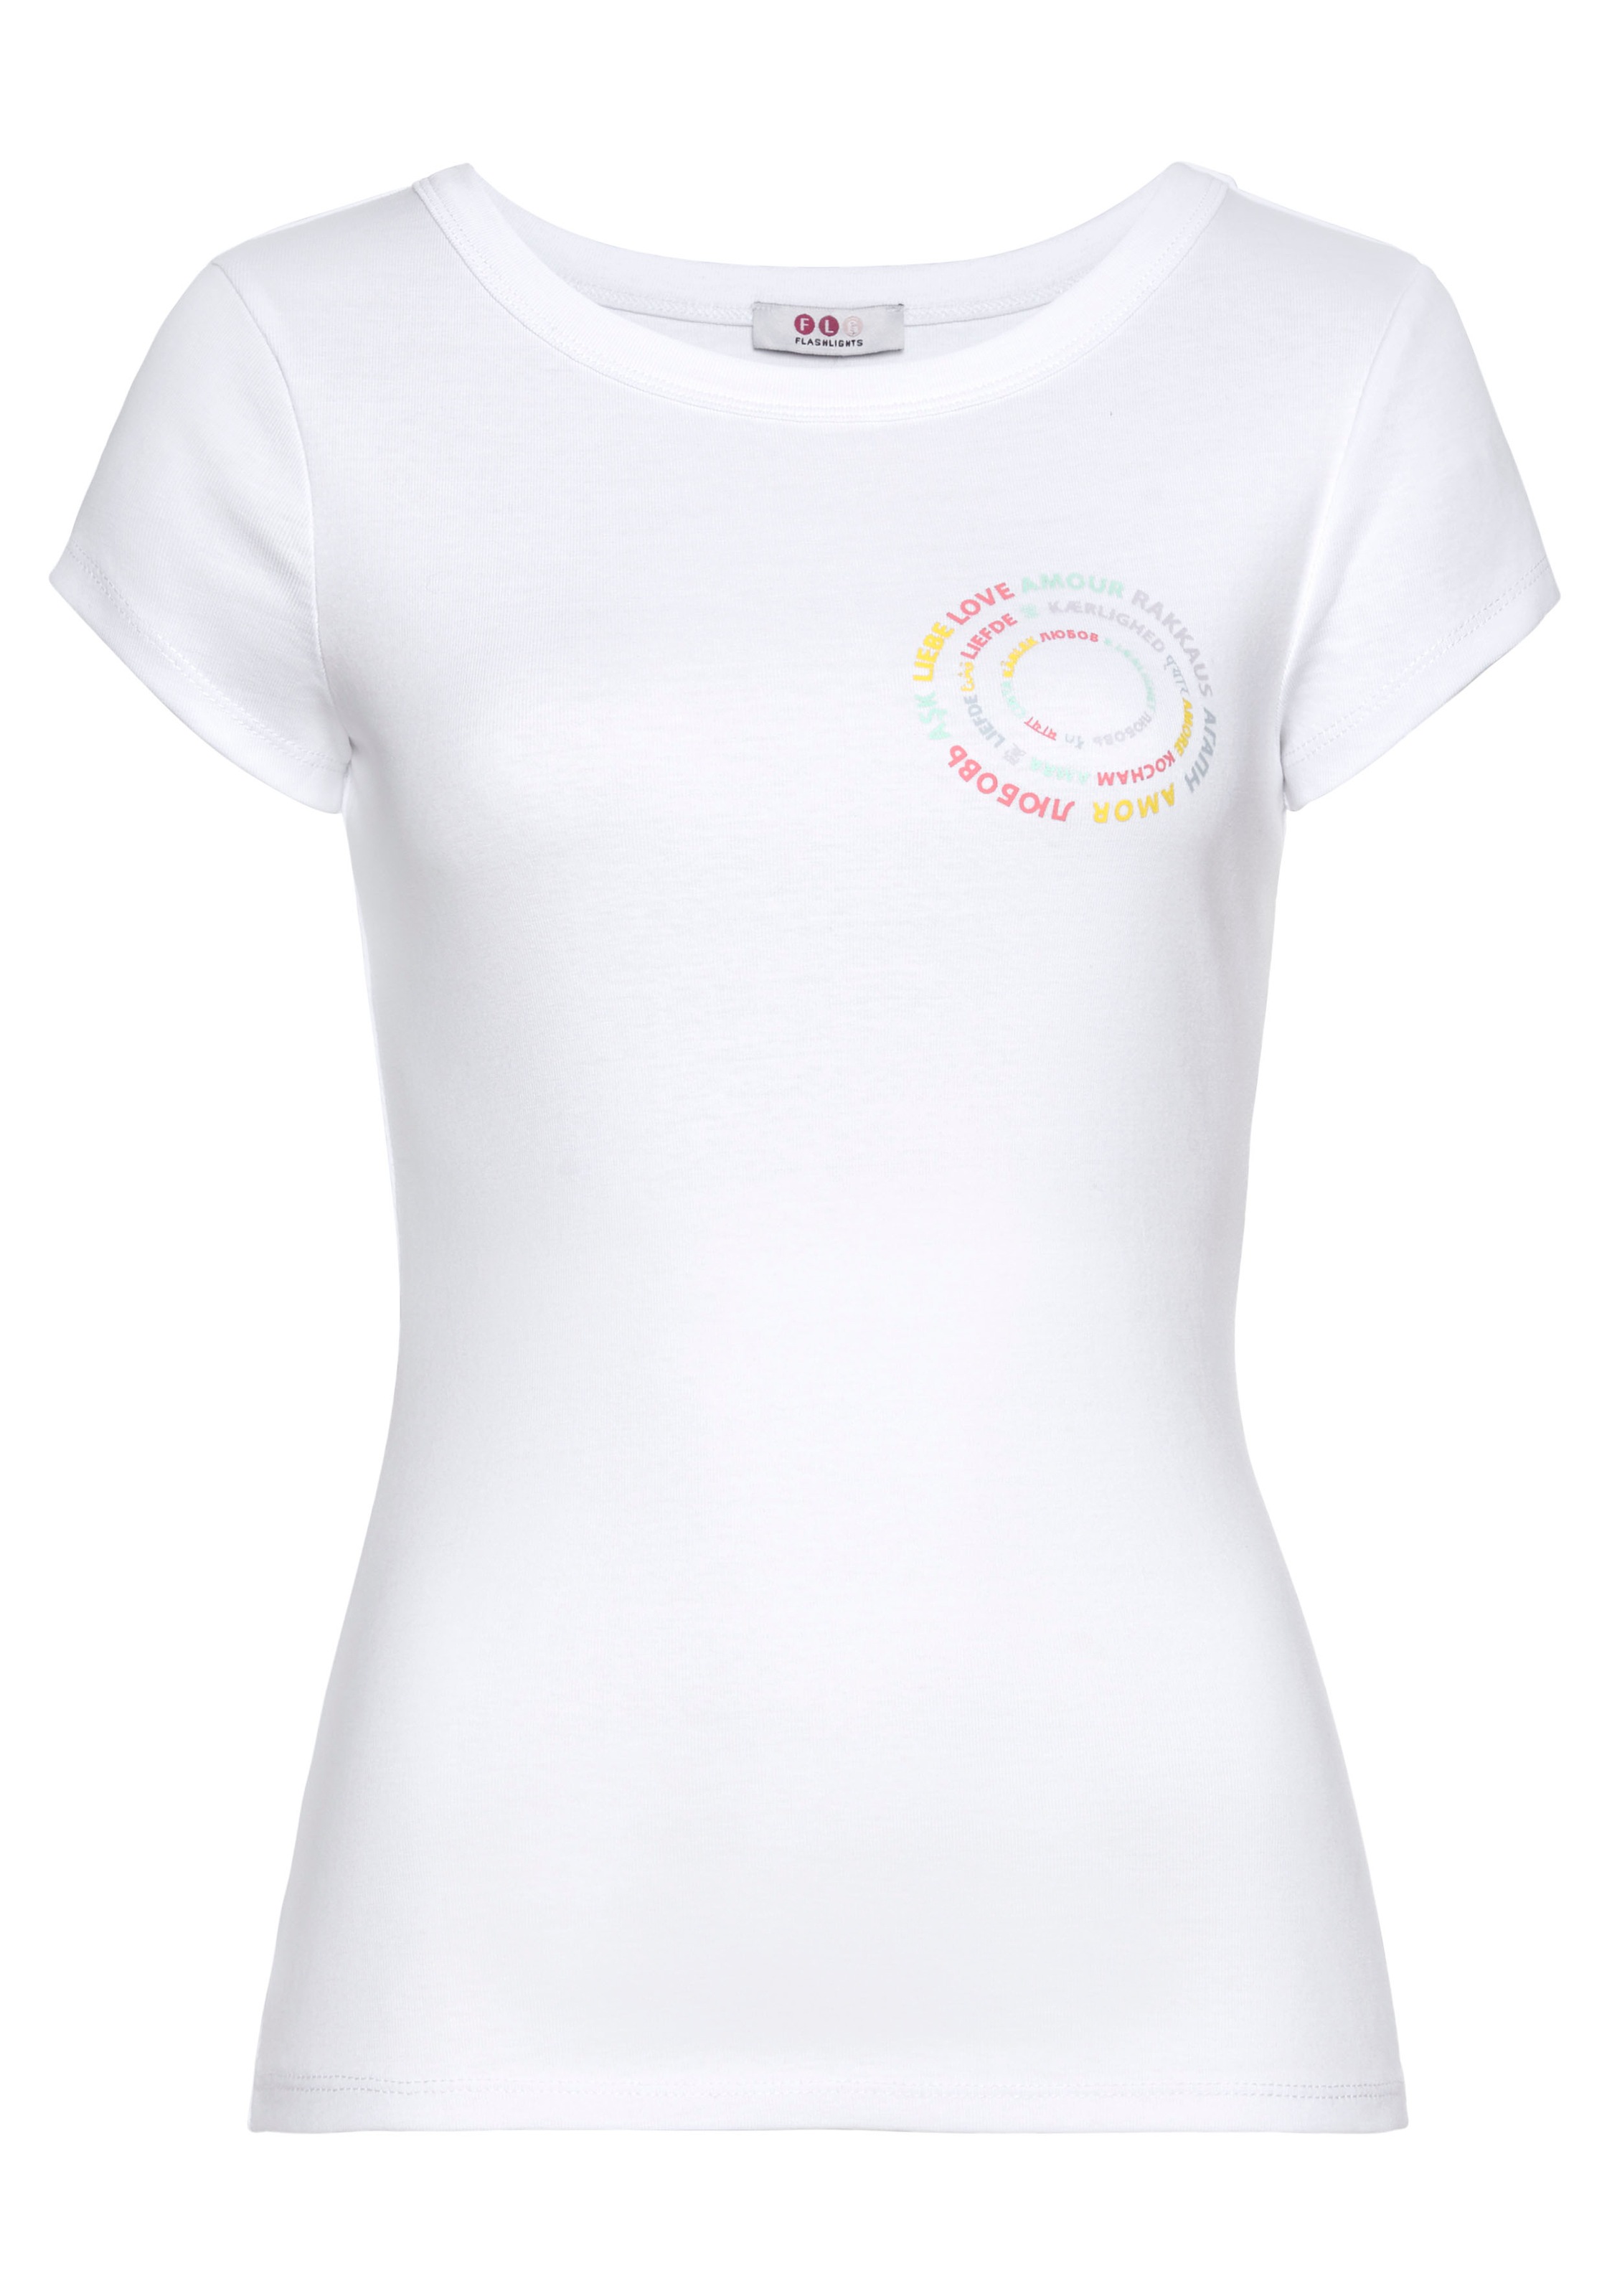 Shop OTTO Pride T-Shirt, Flashlights im Online Edition